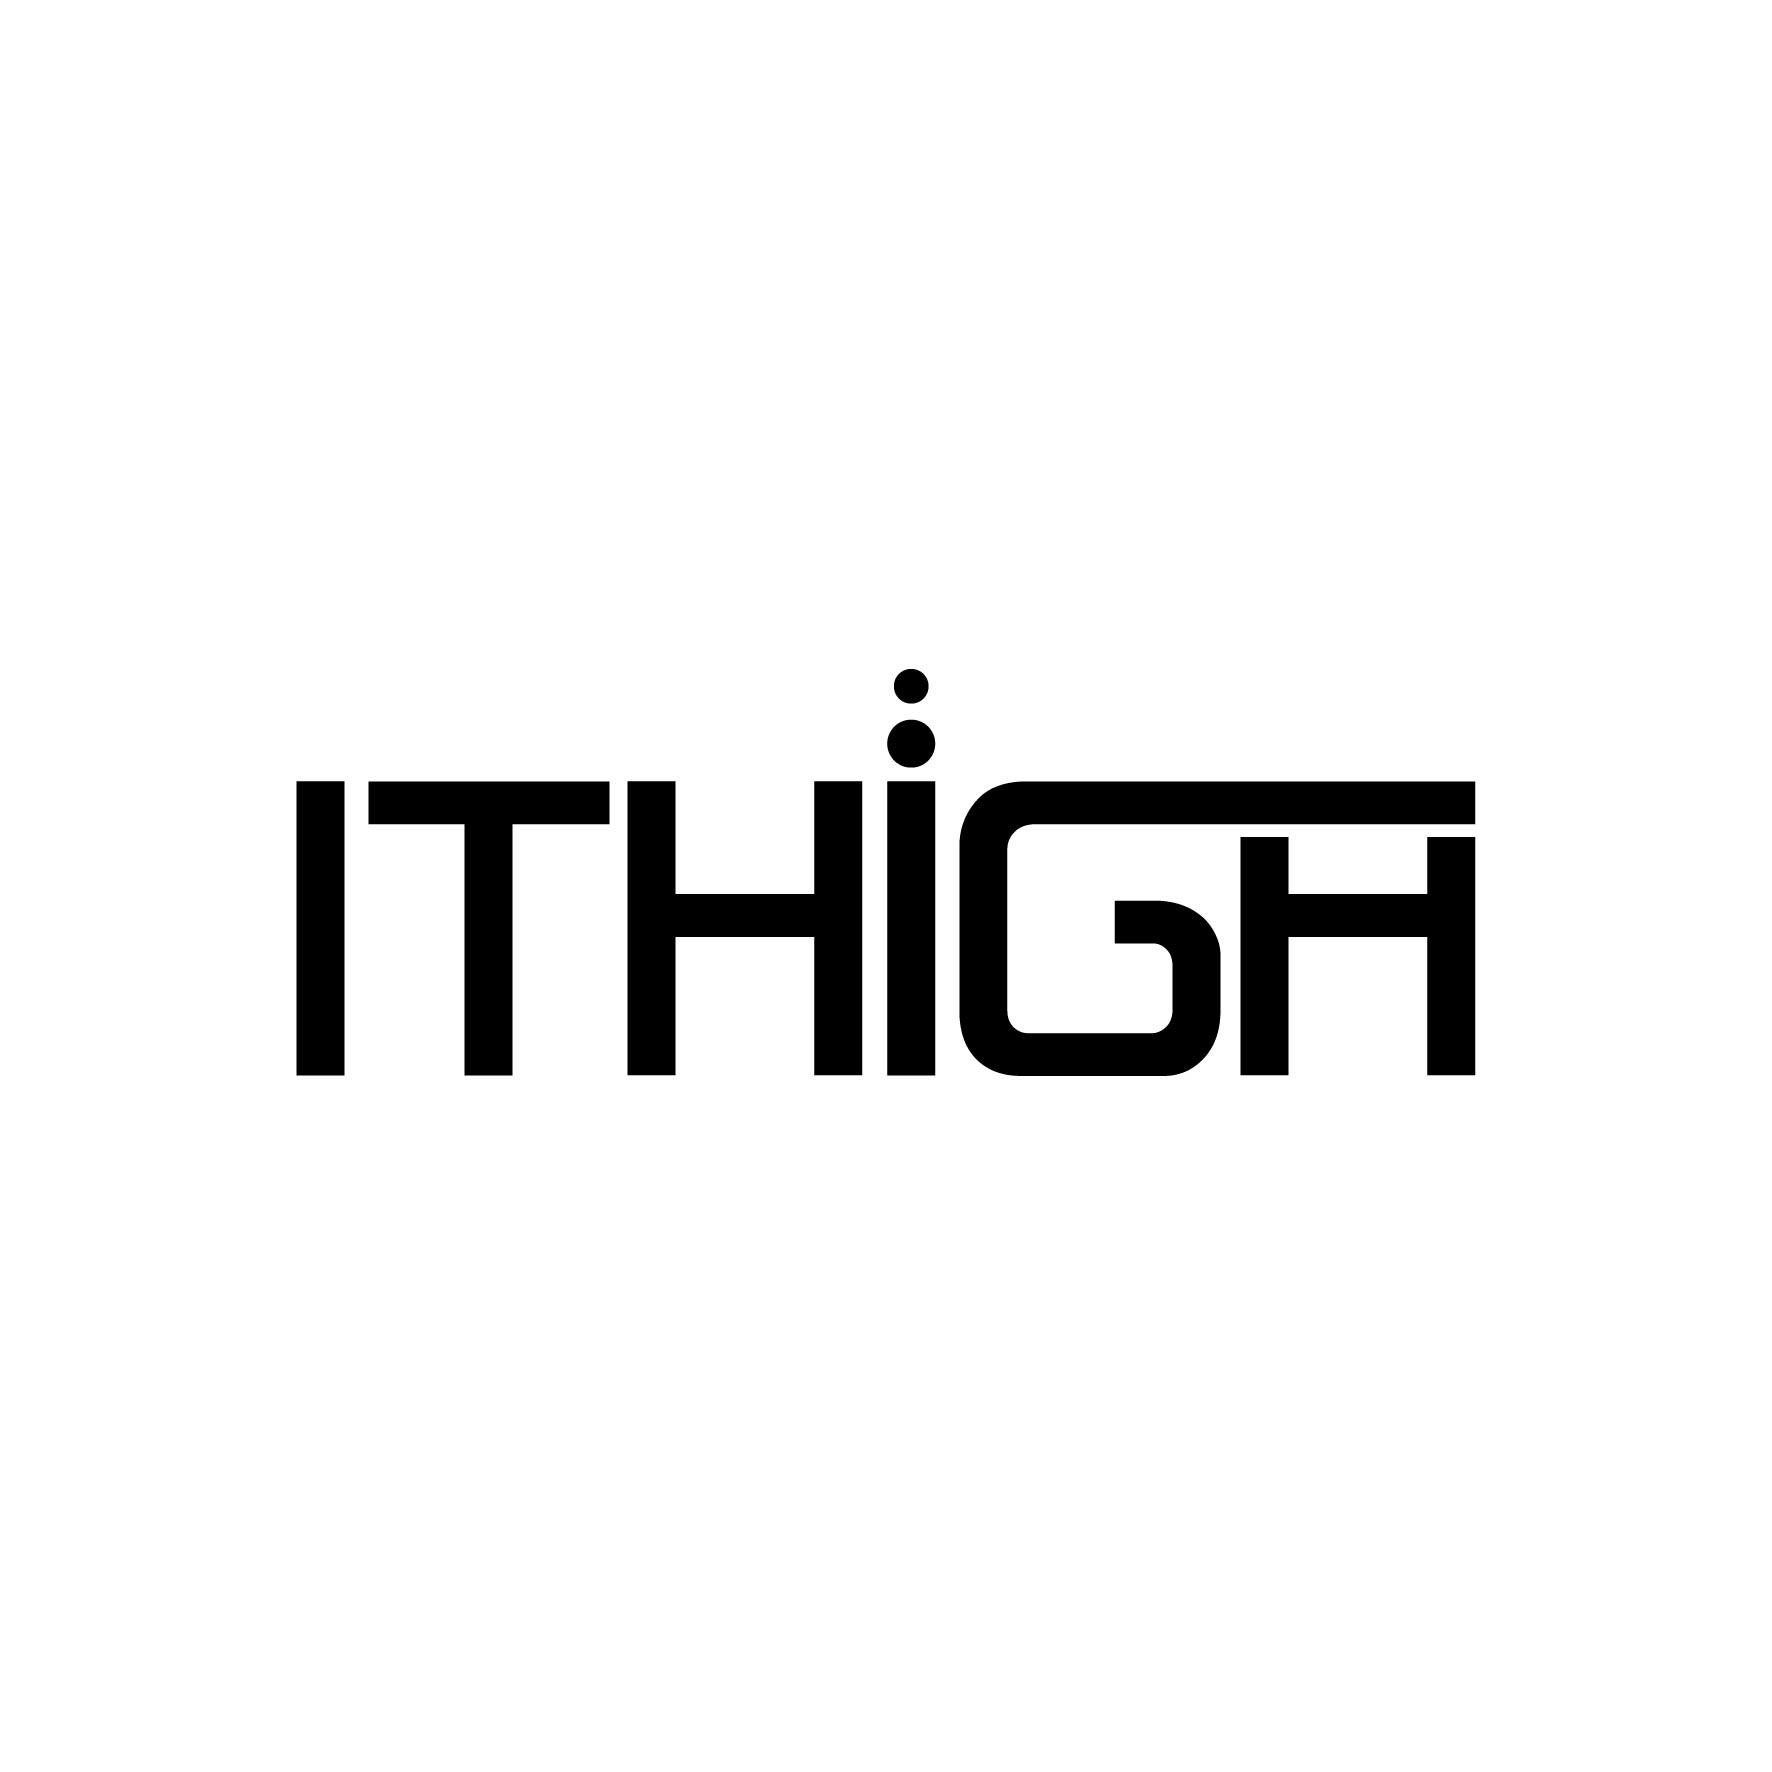 ITHIGH